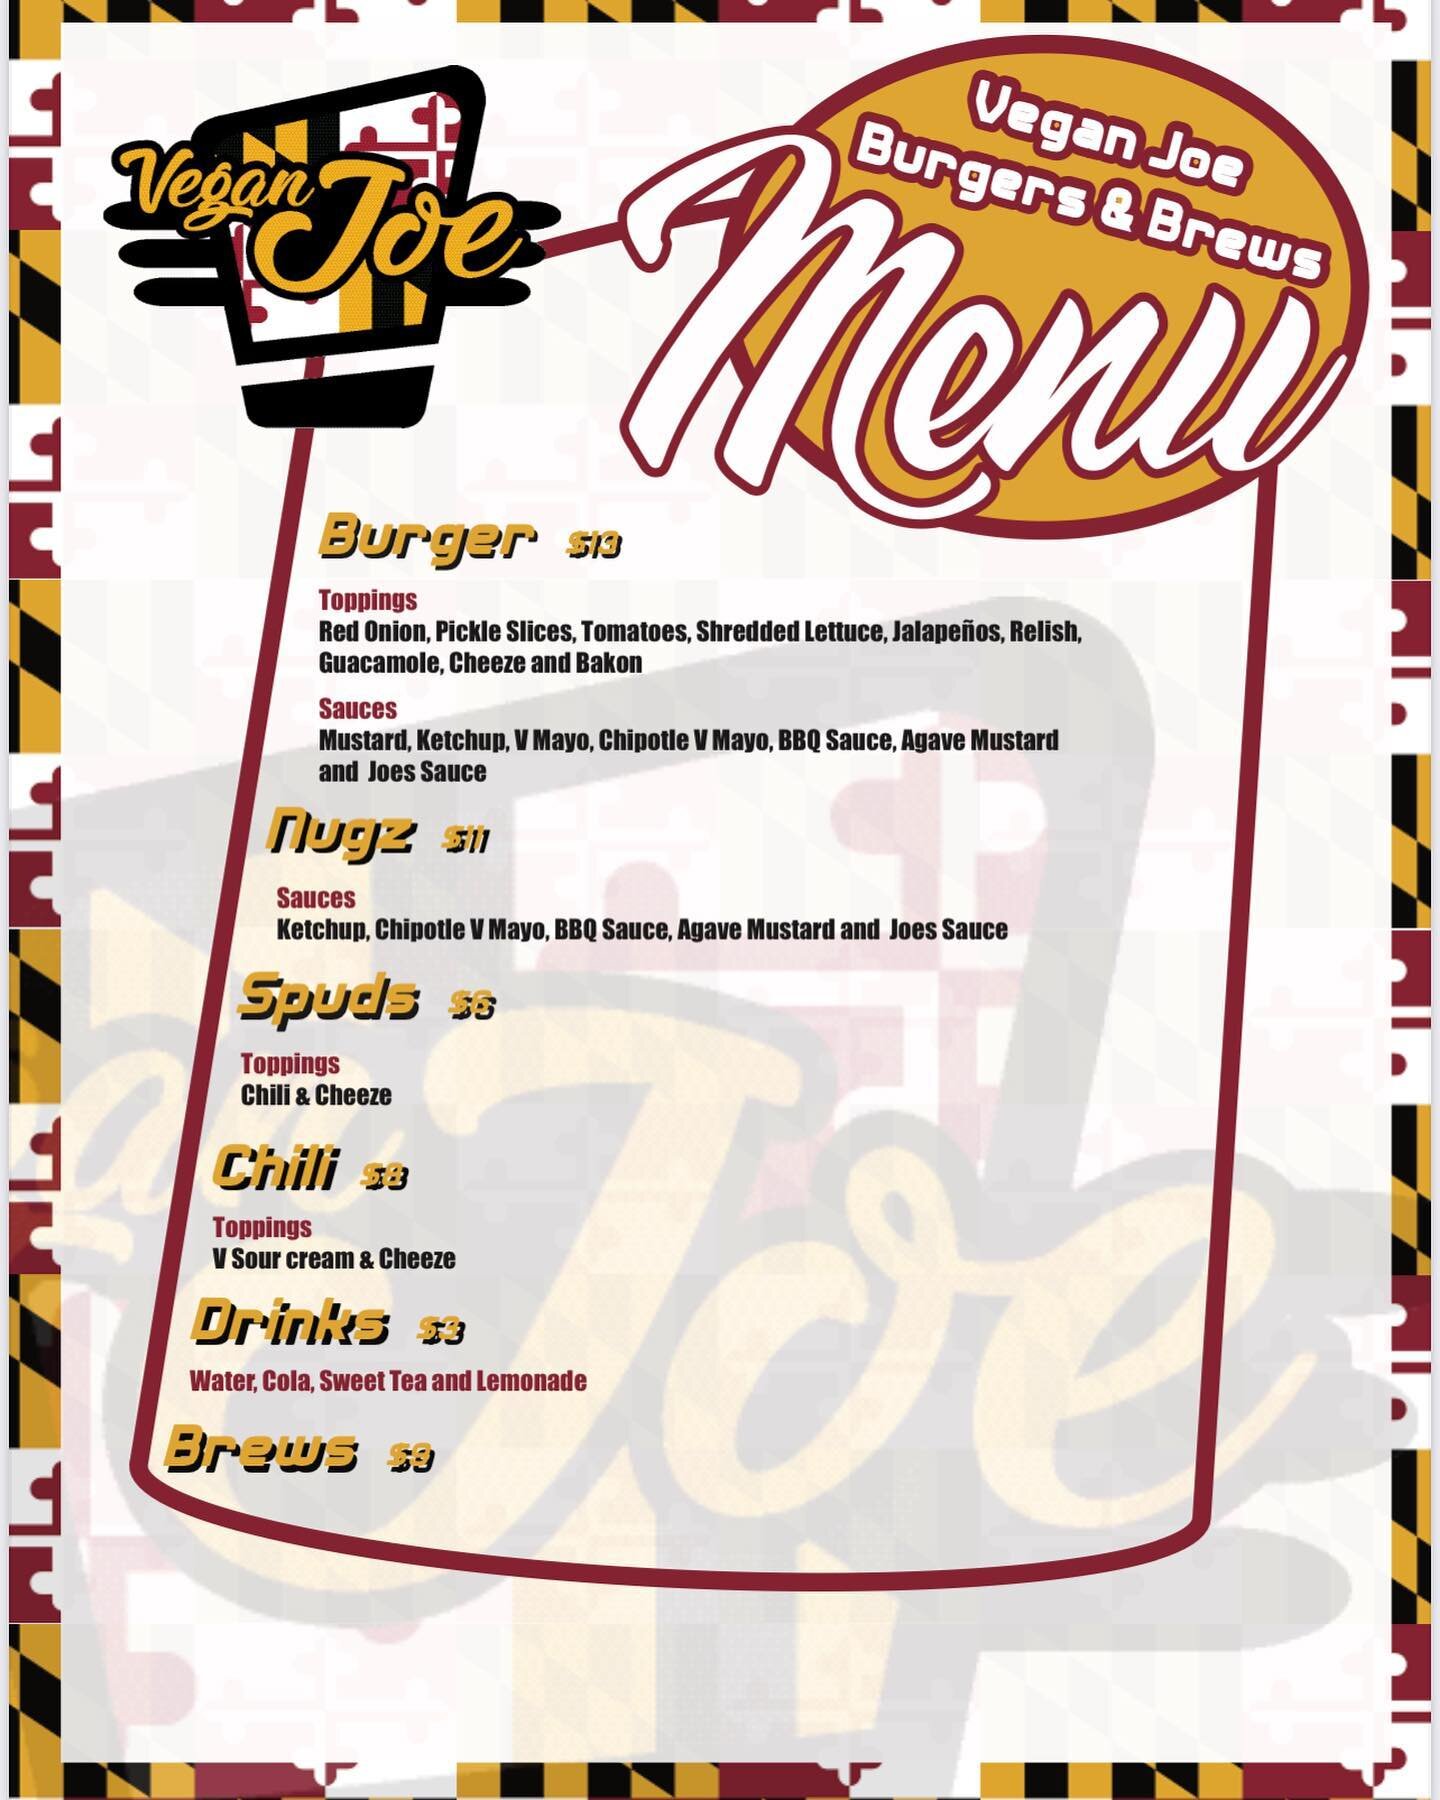 Official New Menu! Catering menu coming soon! &ldquo;Vegan Joe Burger box&rdquo;